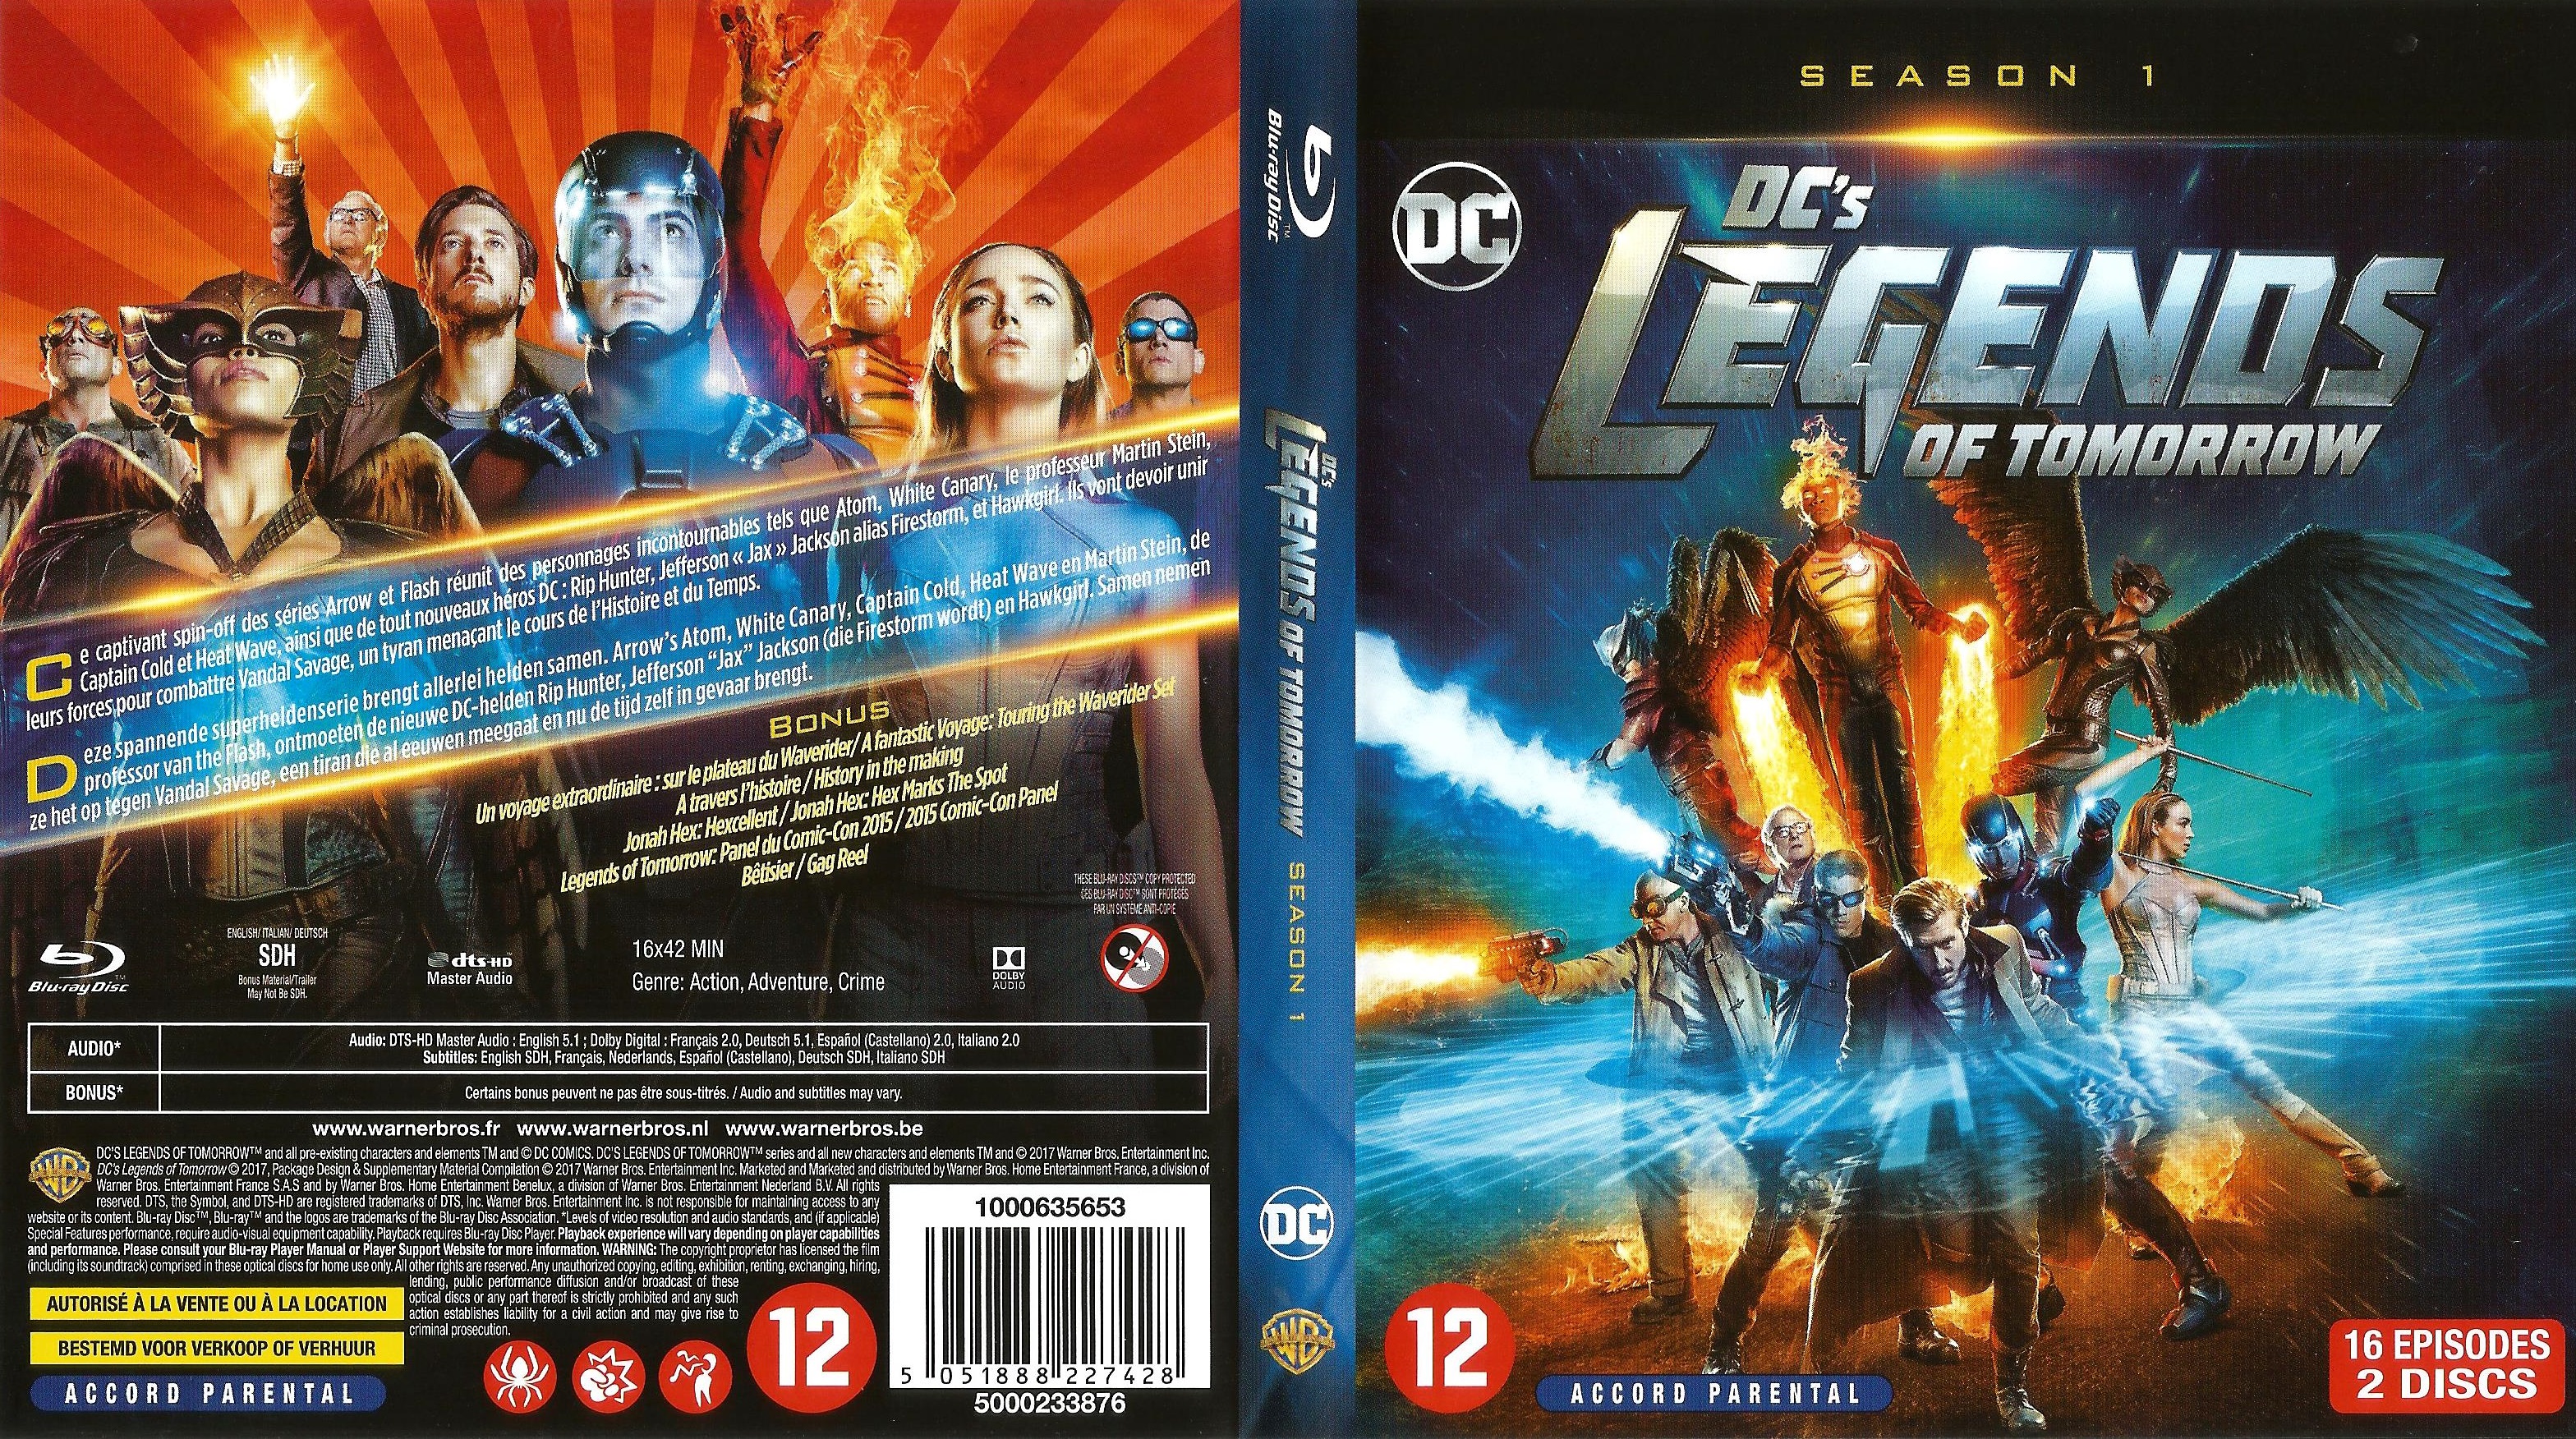 Jaquette DVD Legends of tomorrow saison 1 (BLU-RAY)